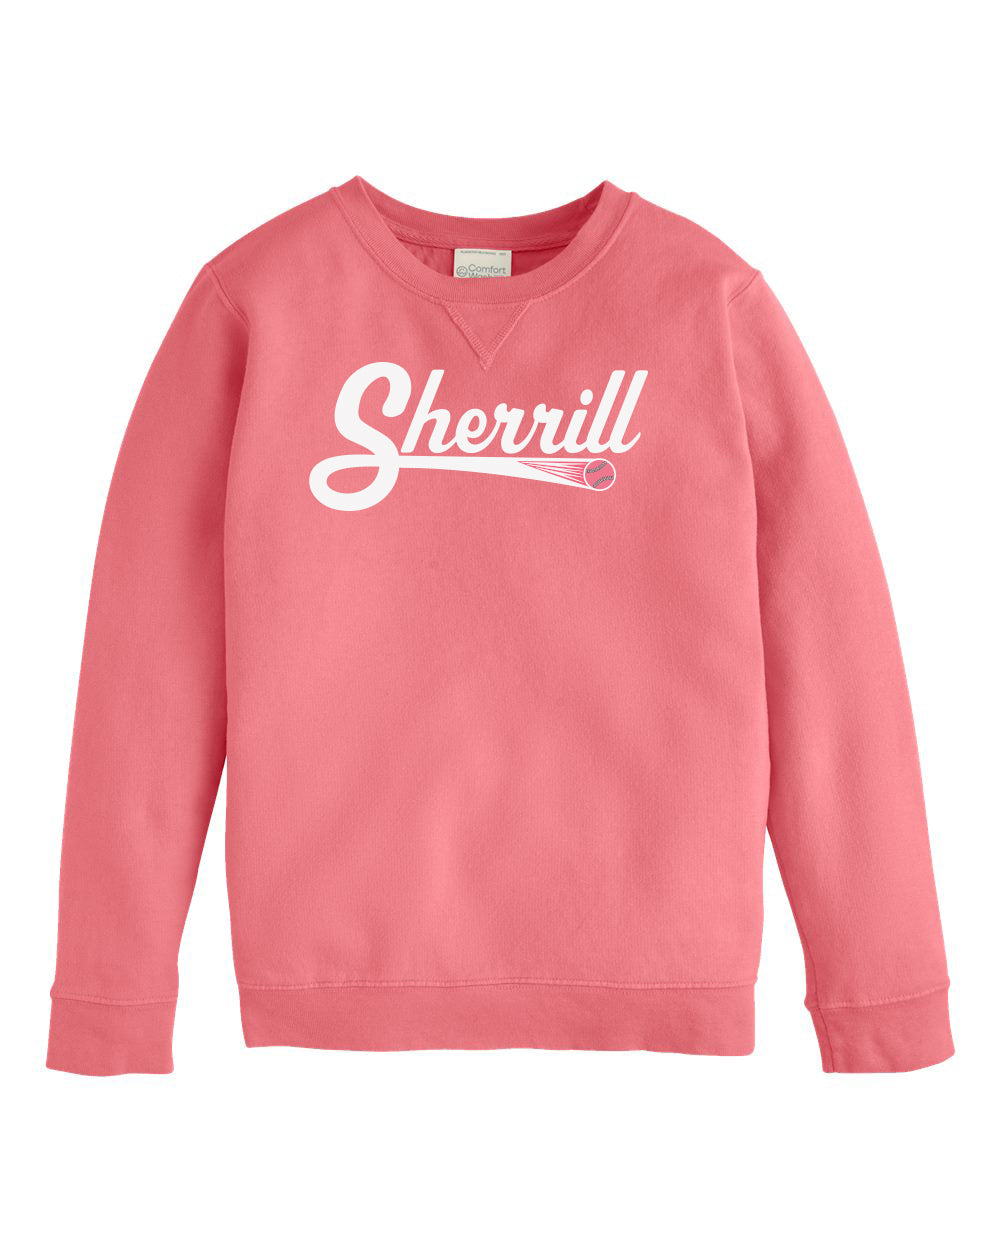 GDH475- SHERRILL YOUTH Garment-Dyed Crewneck Sweatshirt